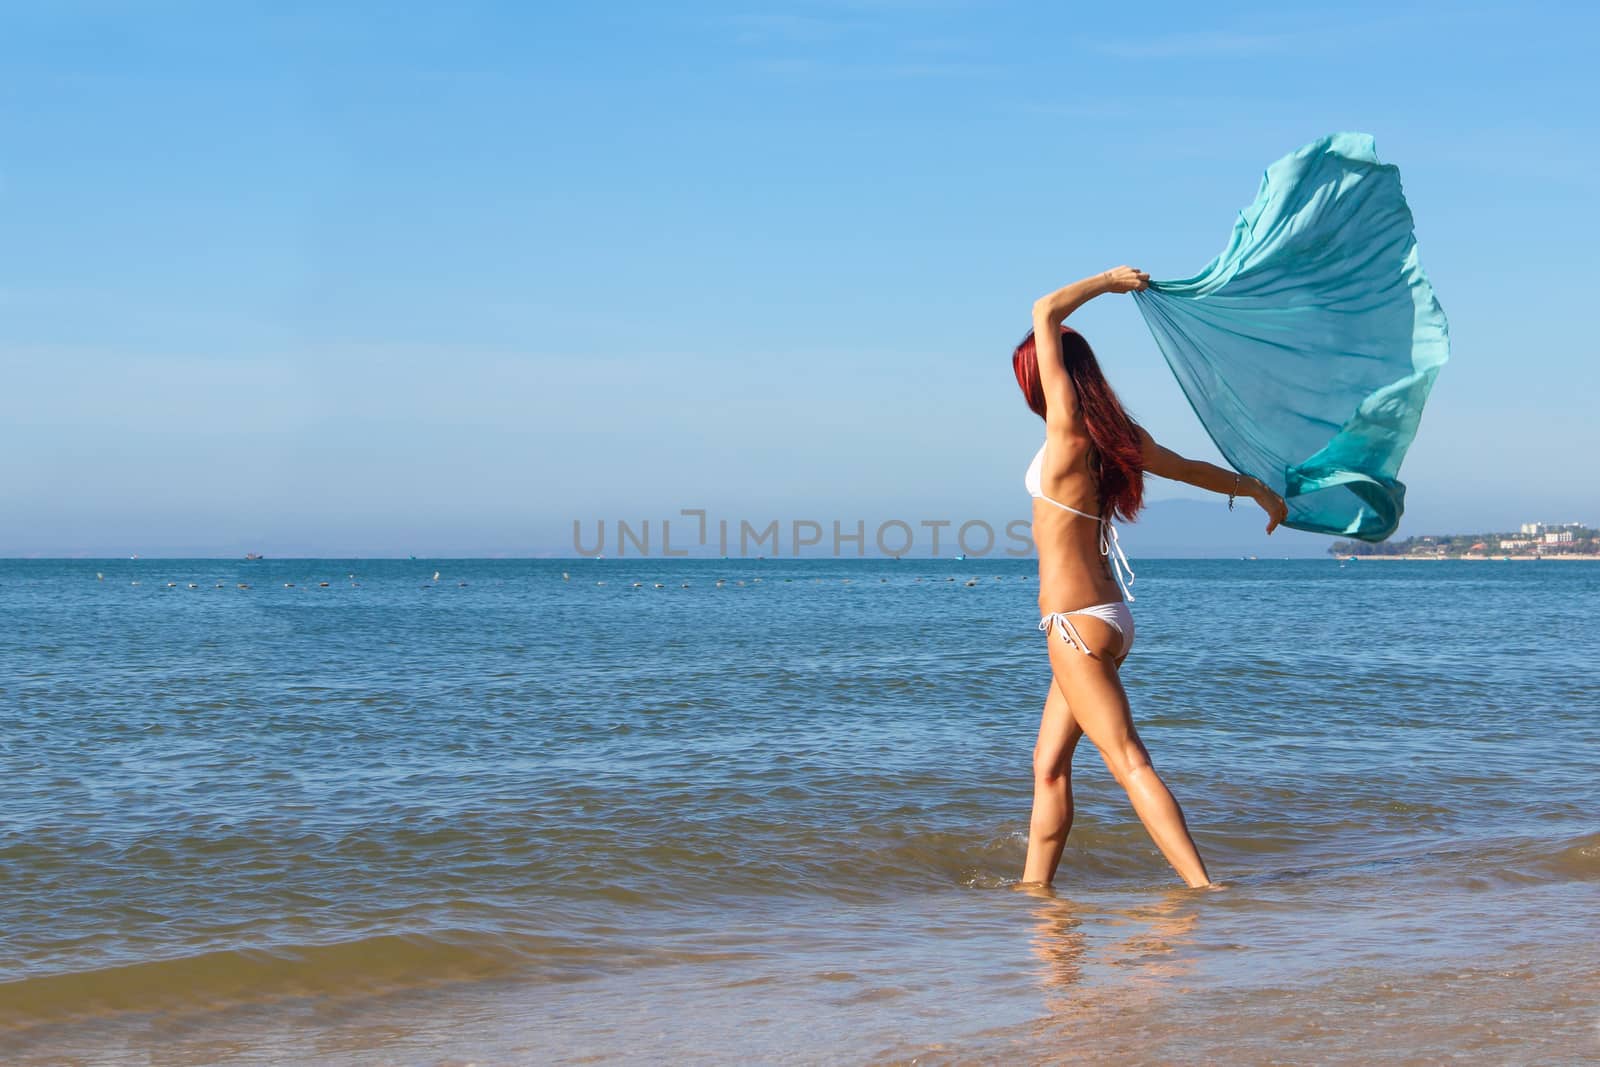 Young slim Woman in bikini walks on tropical beach in Vietnam